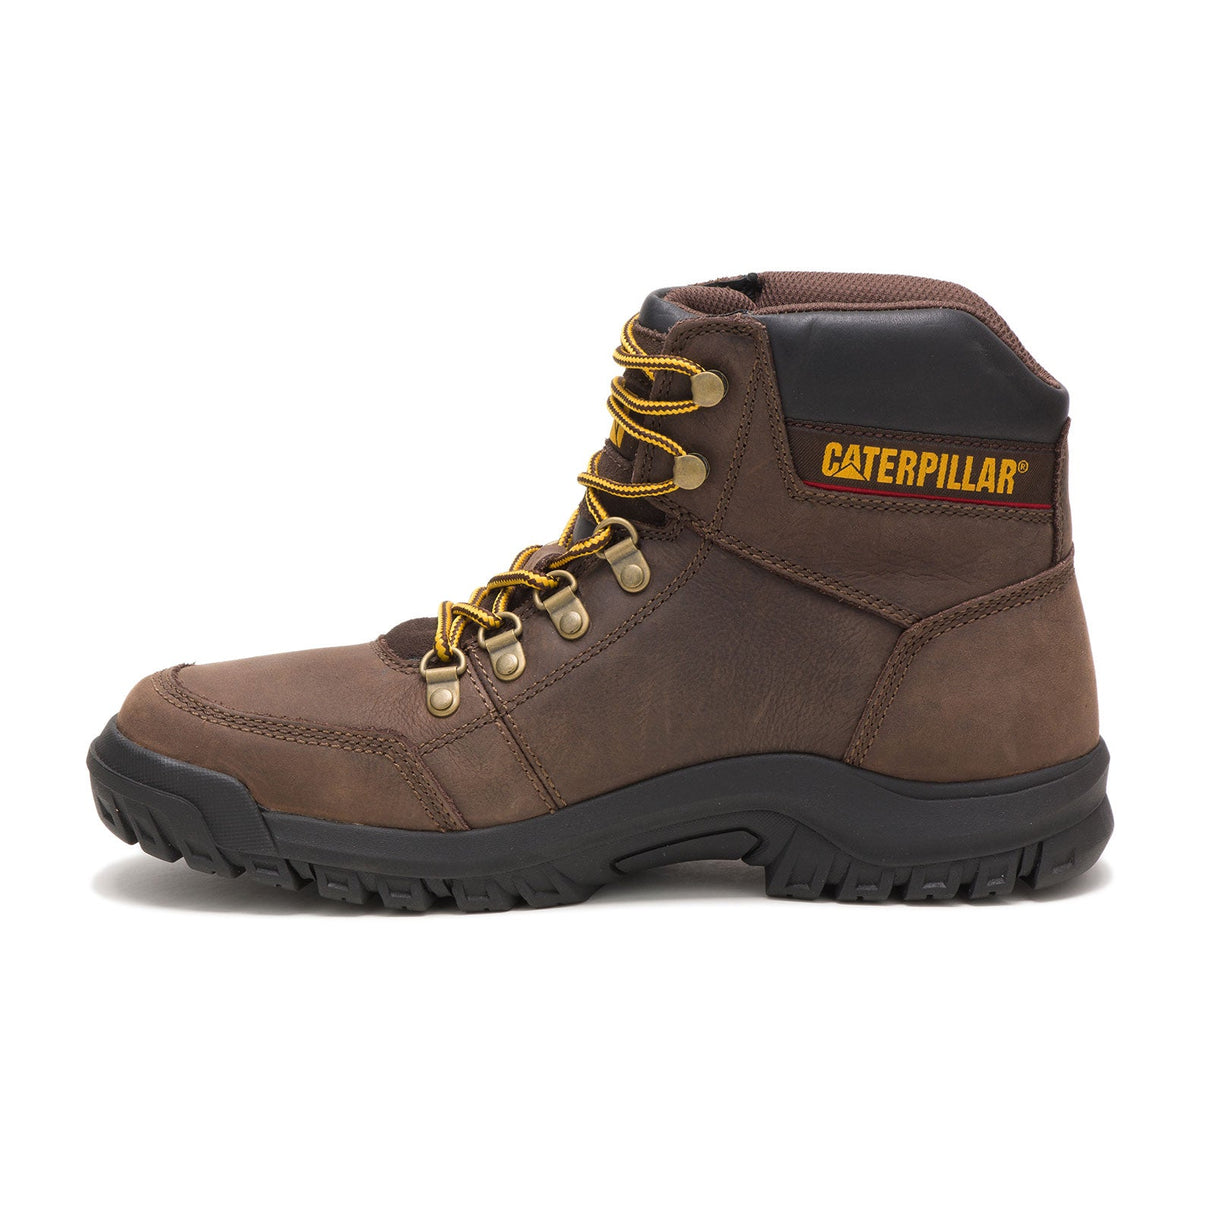 Caterpillar Outline Men's Work Boots P74087-3